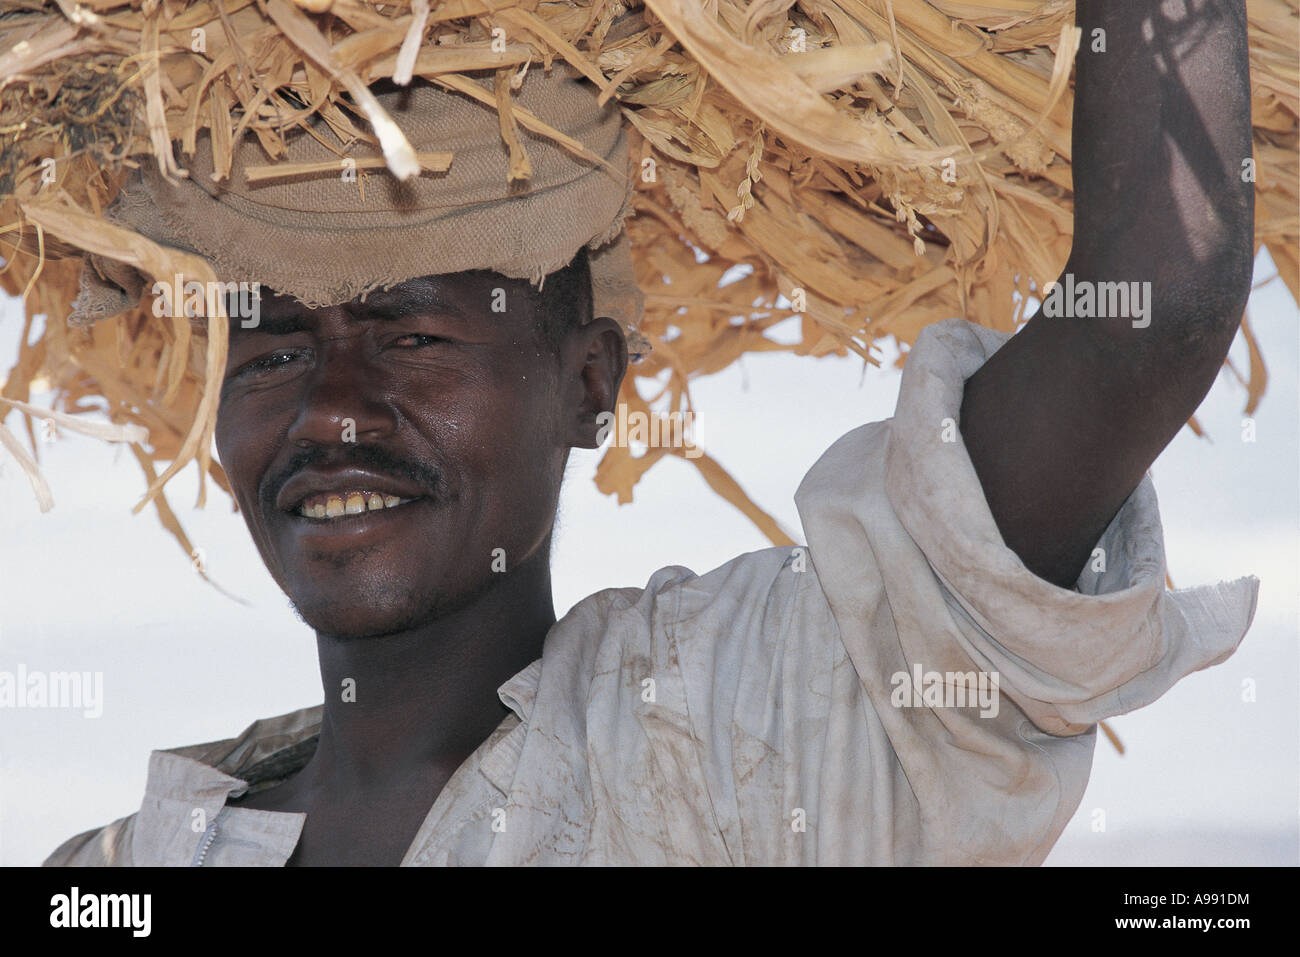 Farmer carrying heavy head load of maize stalks Konso Ethiopia Stock Photo